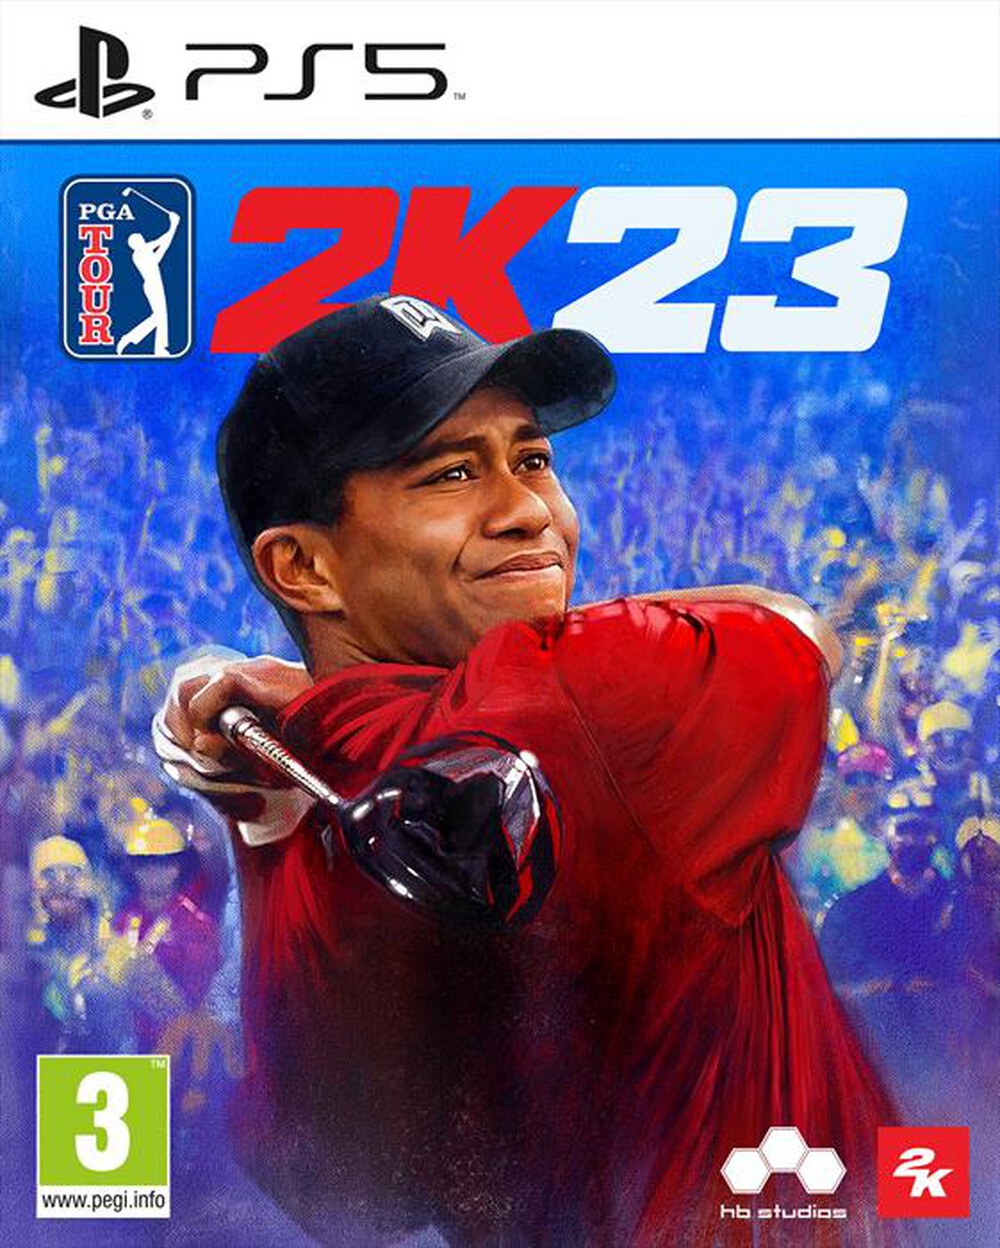 "2K GAMES - PGA TOUR 2K23"